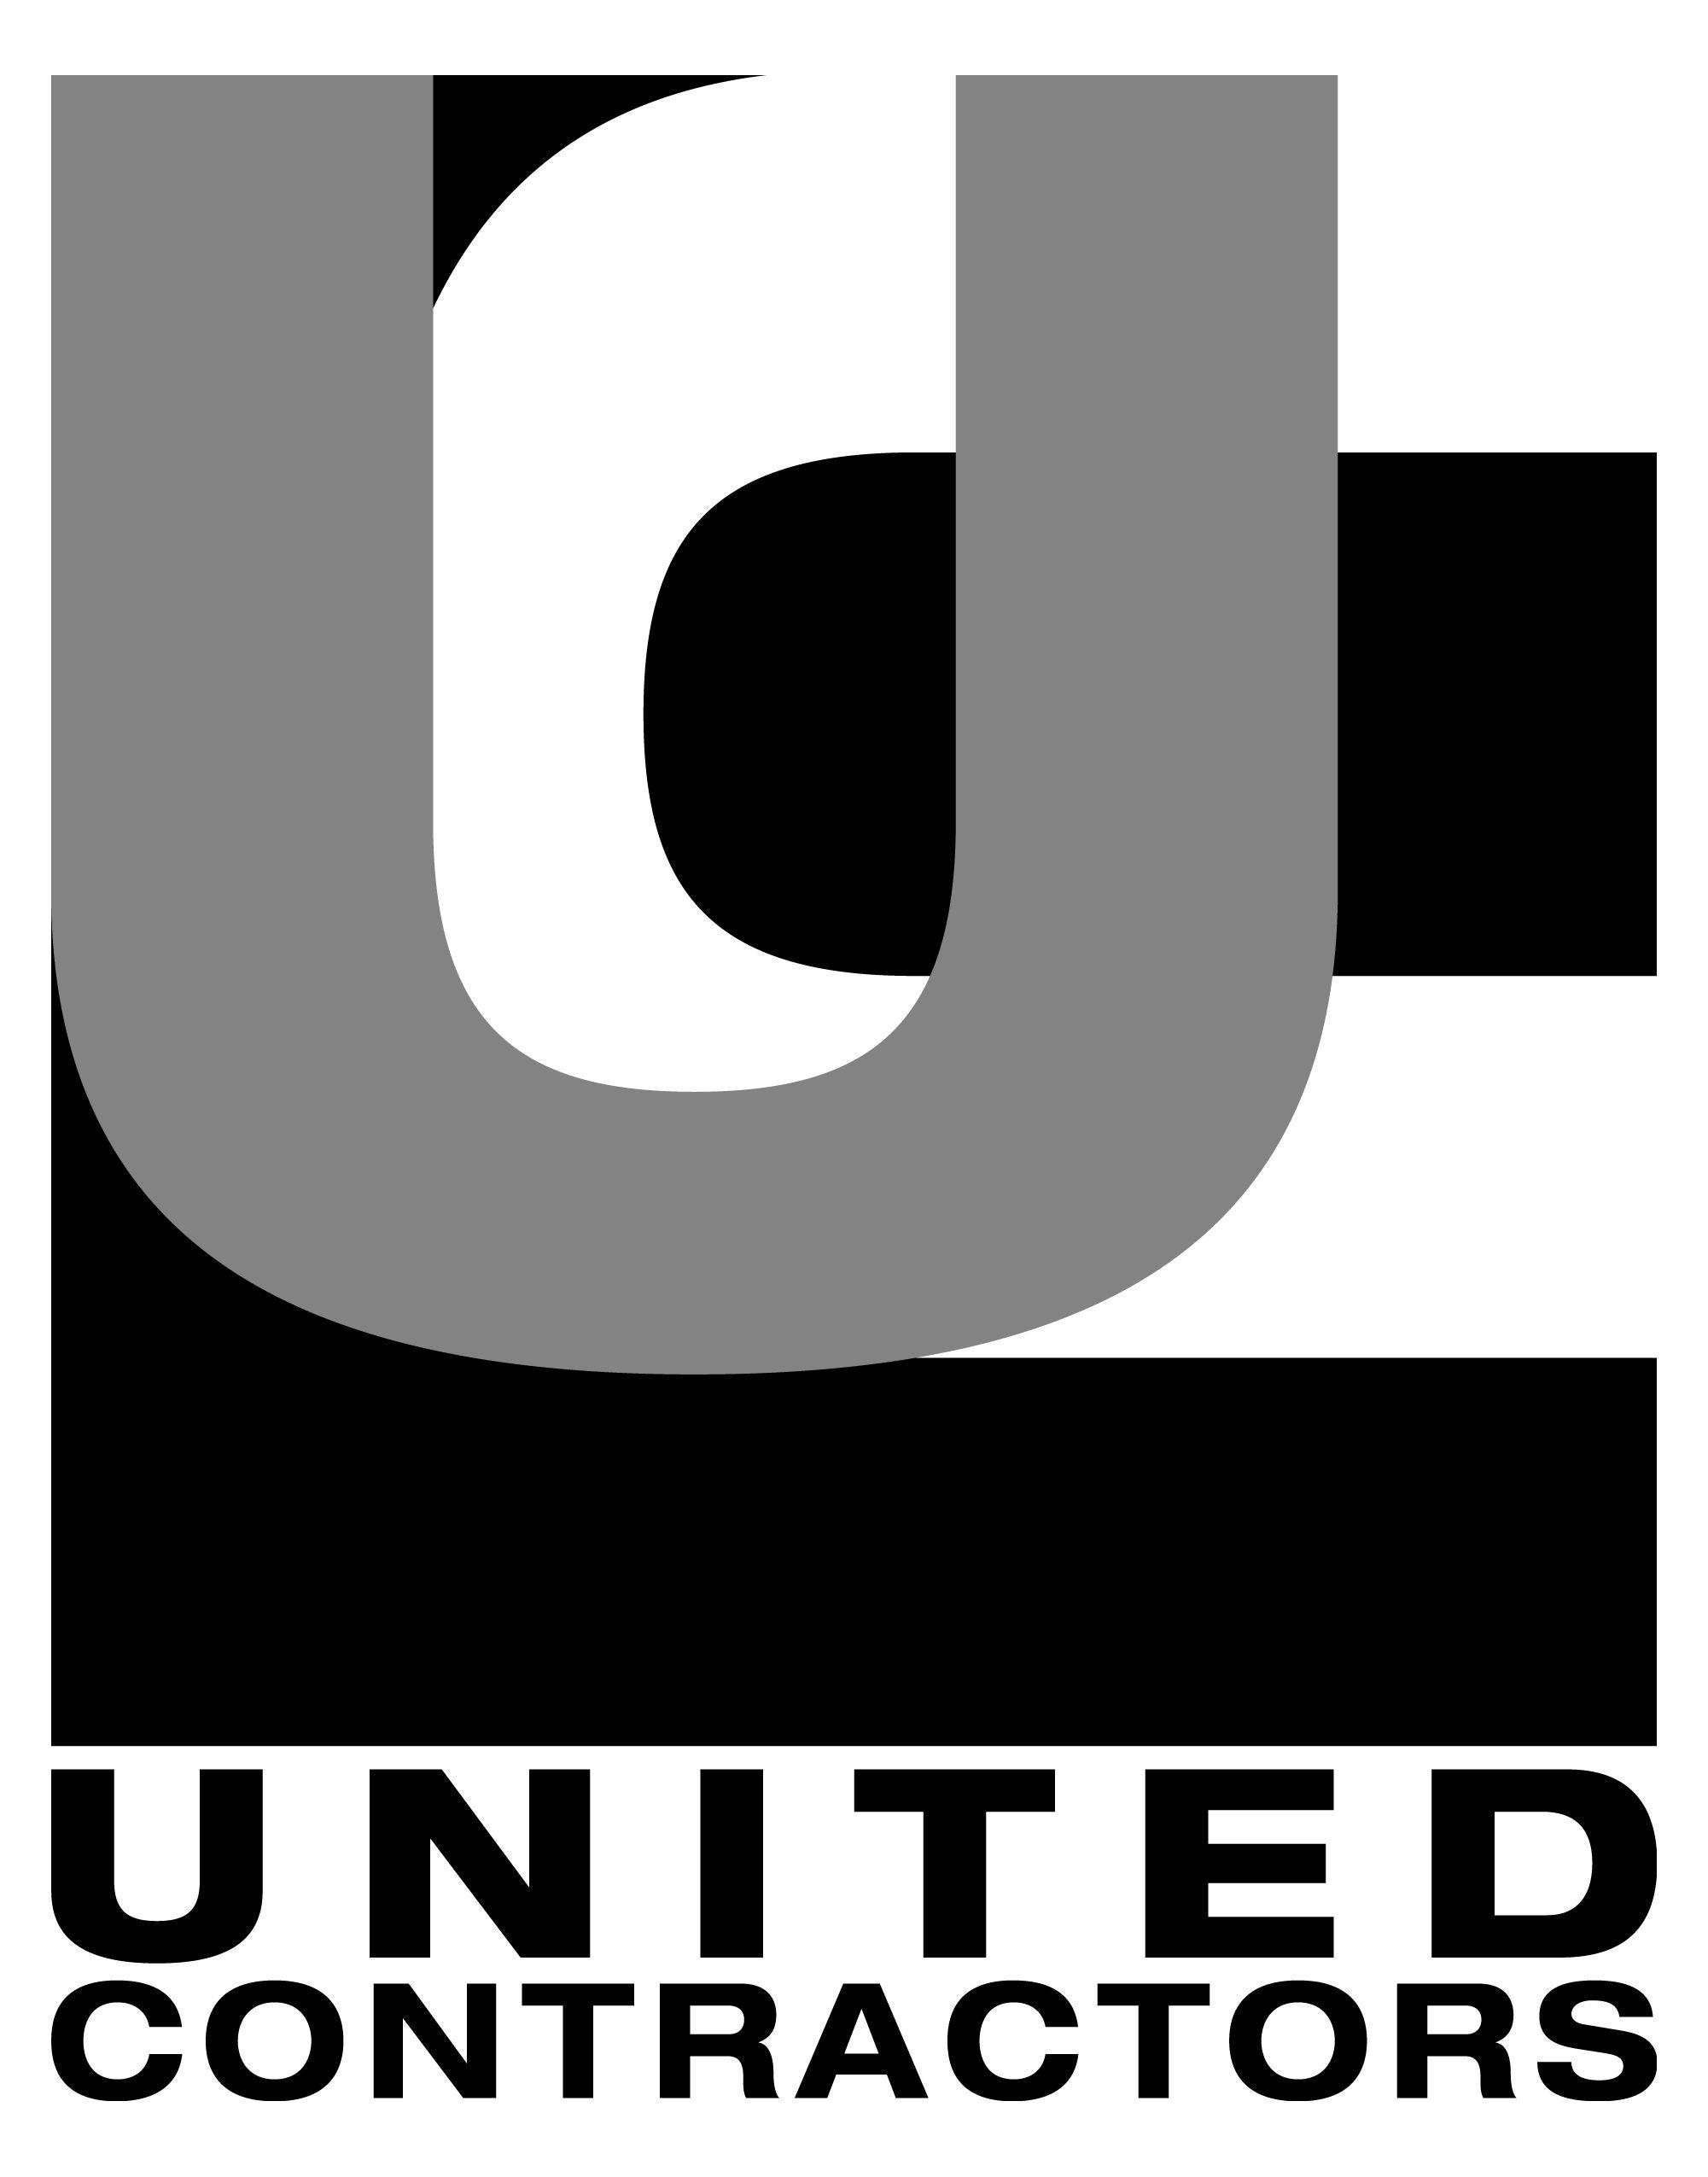 Contractors Logo - United Contractors Logos